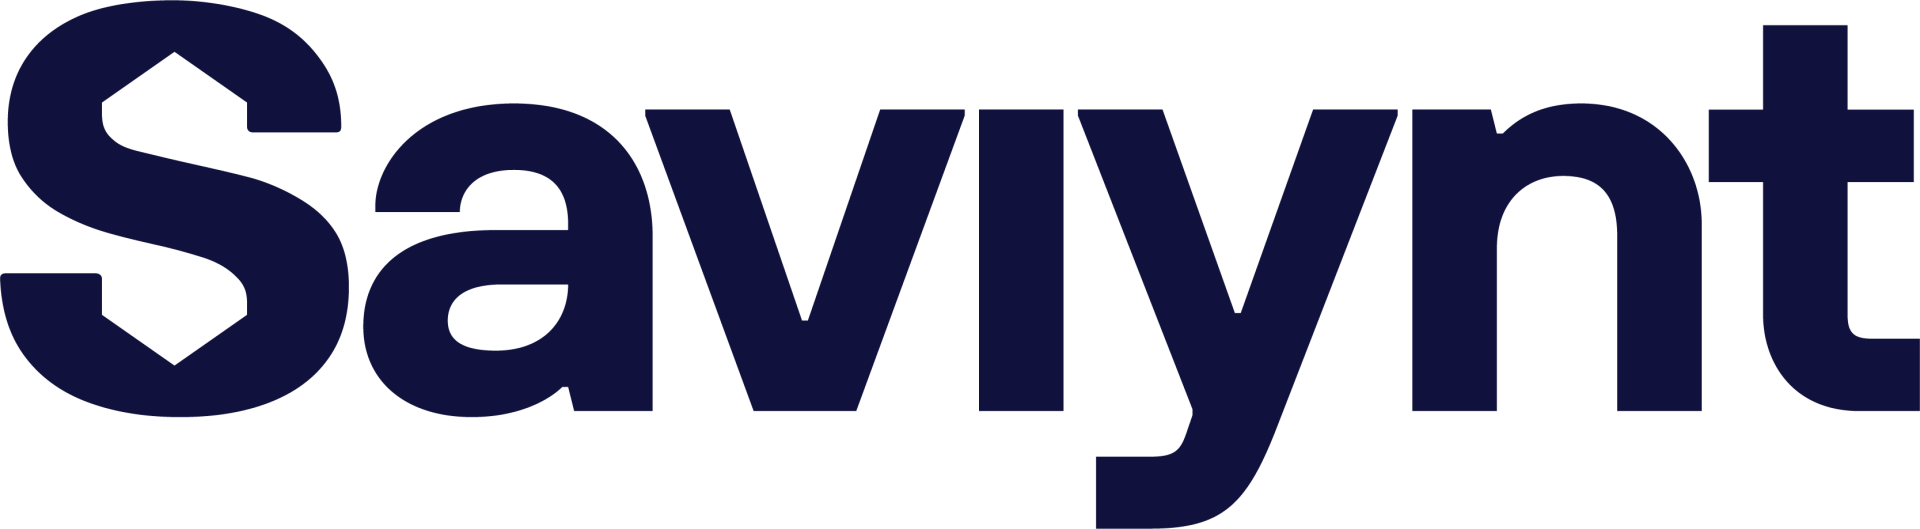 saviynt-logo